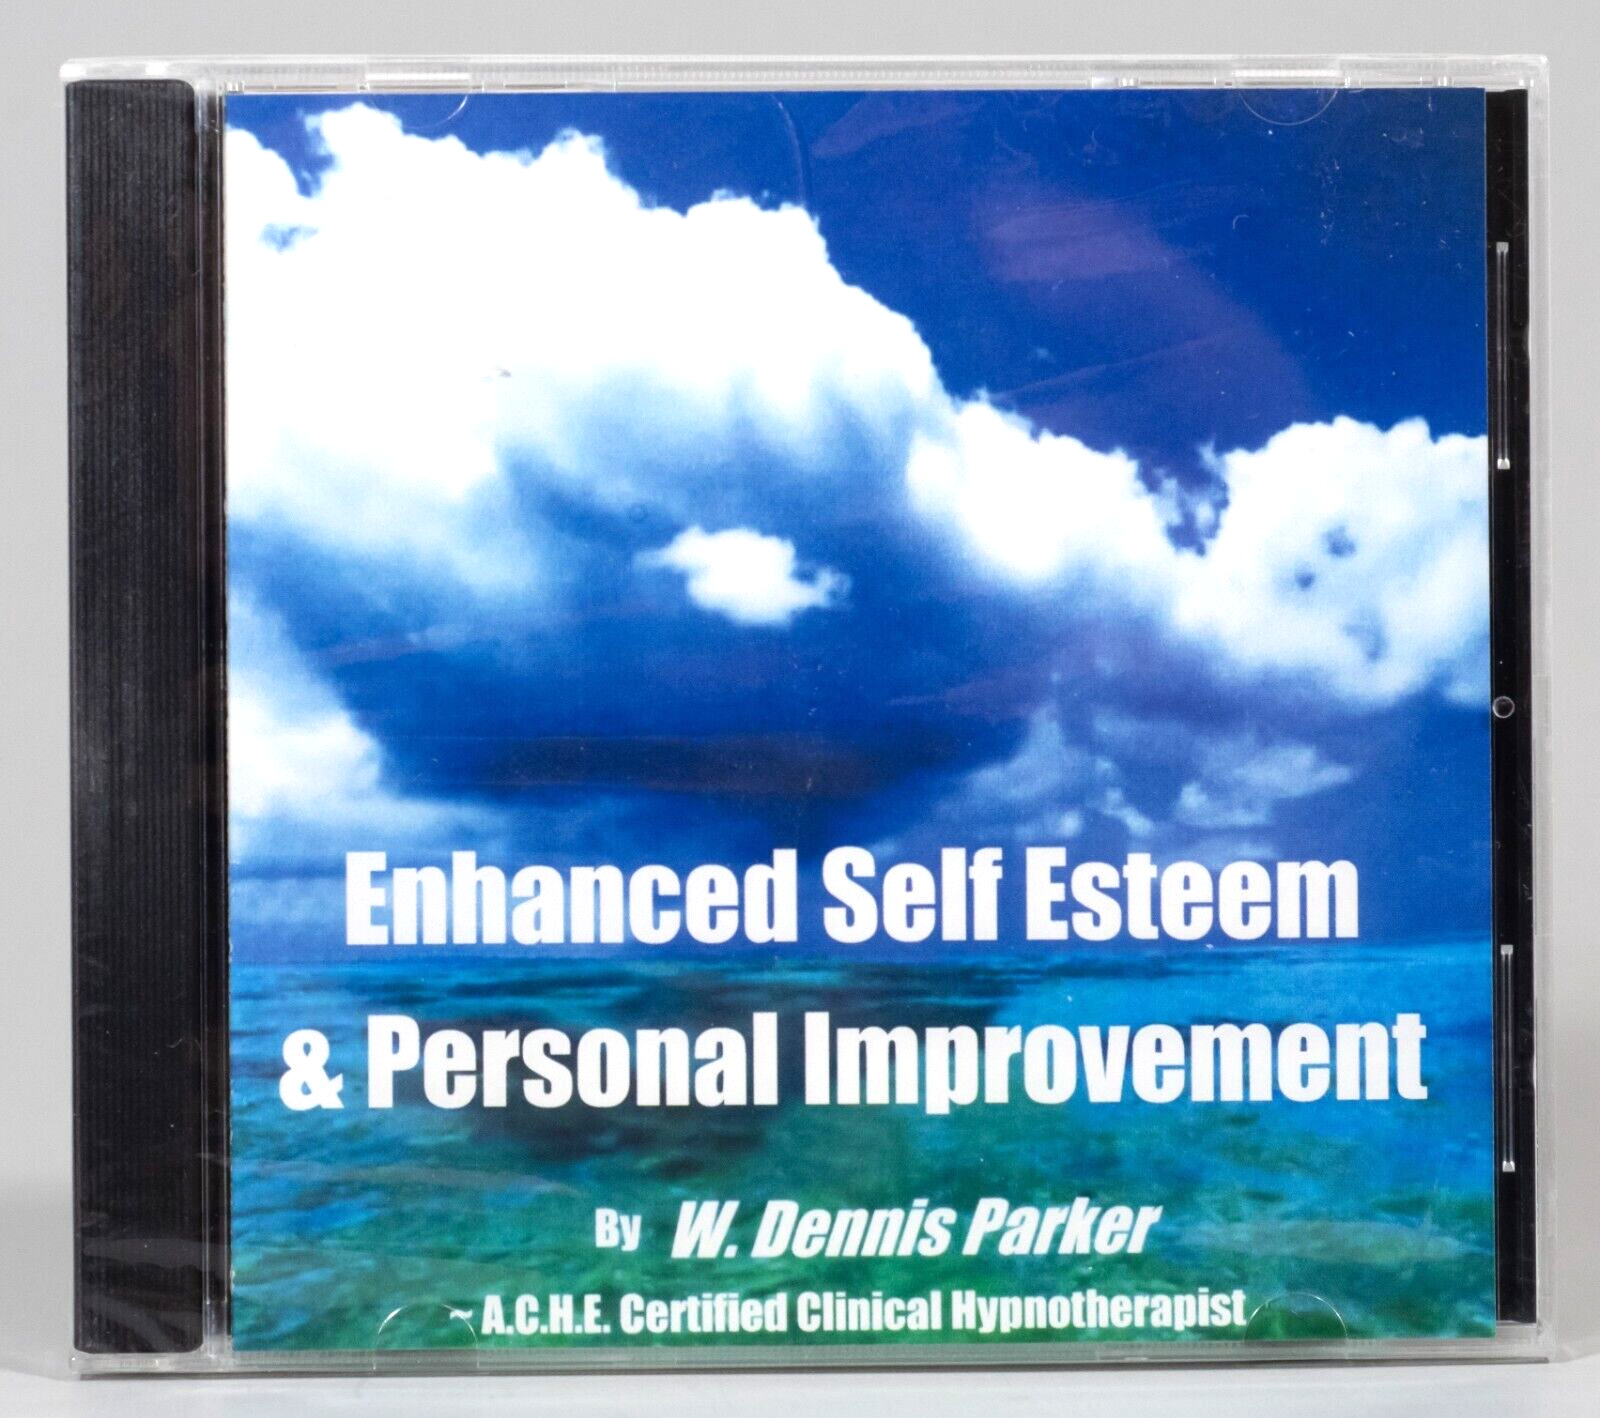 Enhanced Self Esteem & Personal Improvement Hypnotherapy Cd By W. Dennis Parker